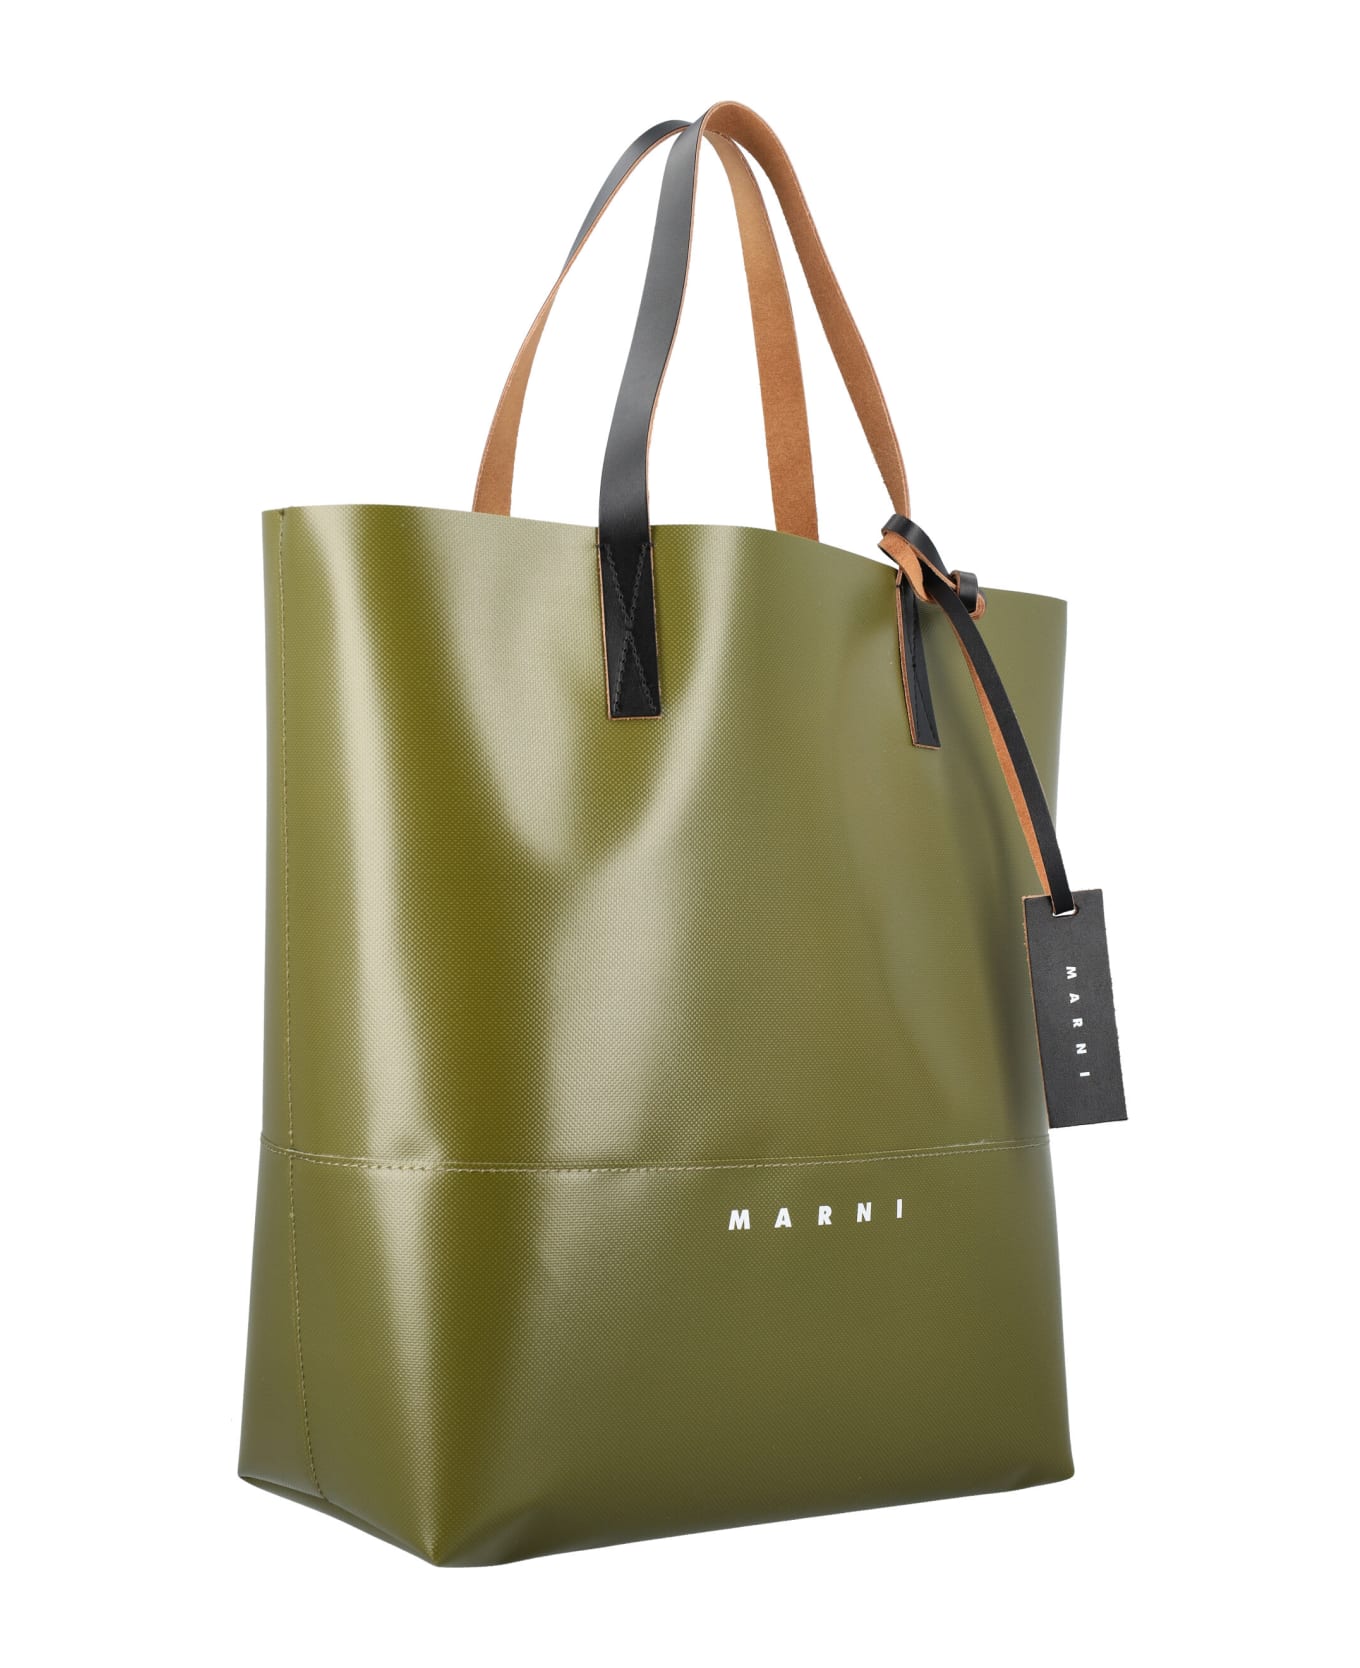 Marni Tribeca Shopping Bag - MILITARY GREEN トートバッグ